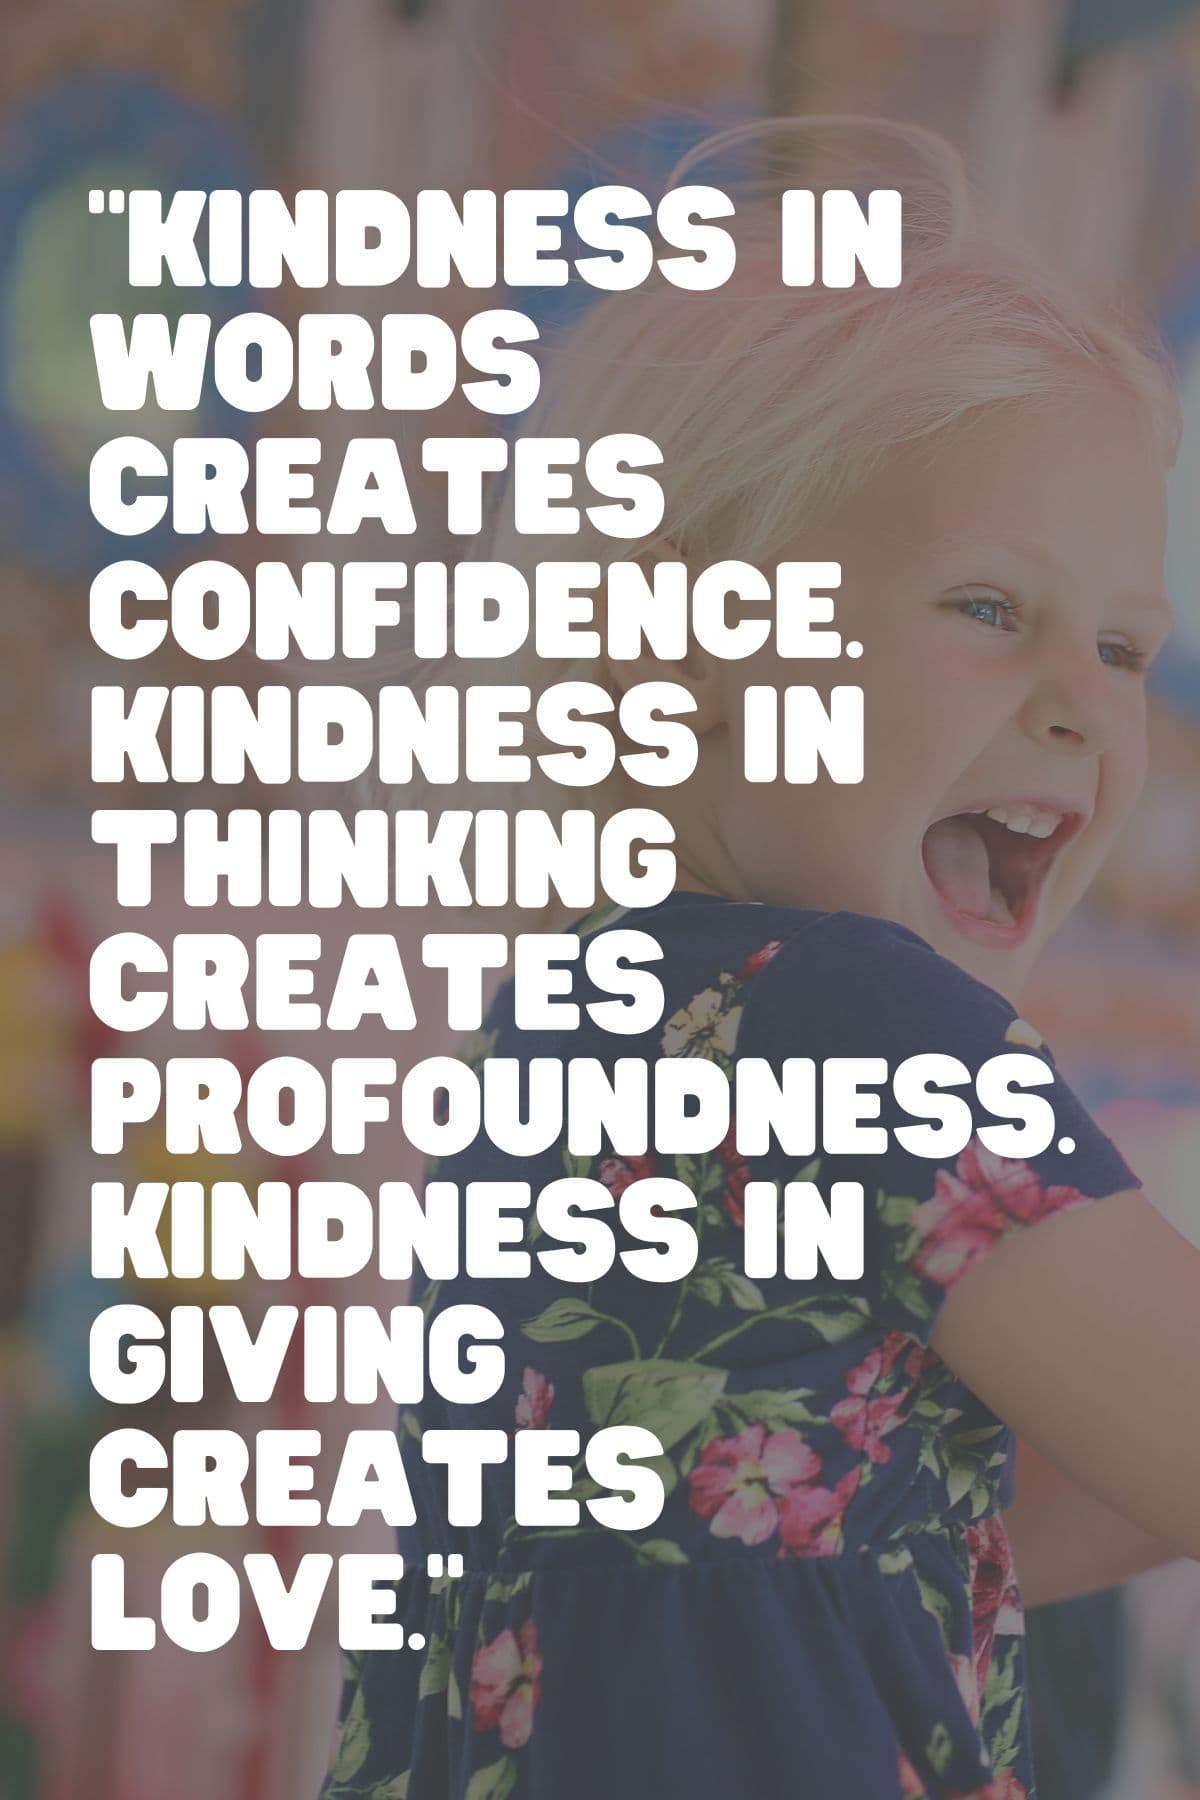 “Kindness in words creates confidence. Kindness in thinking creates profoundness. Kindness in giving creates love.” – Lao Tzu 